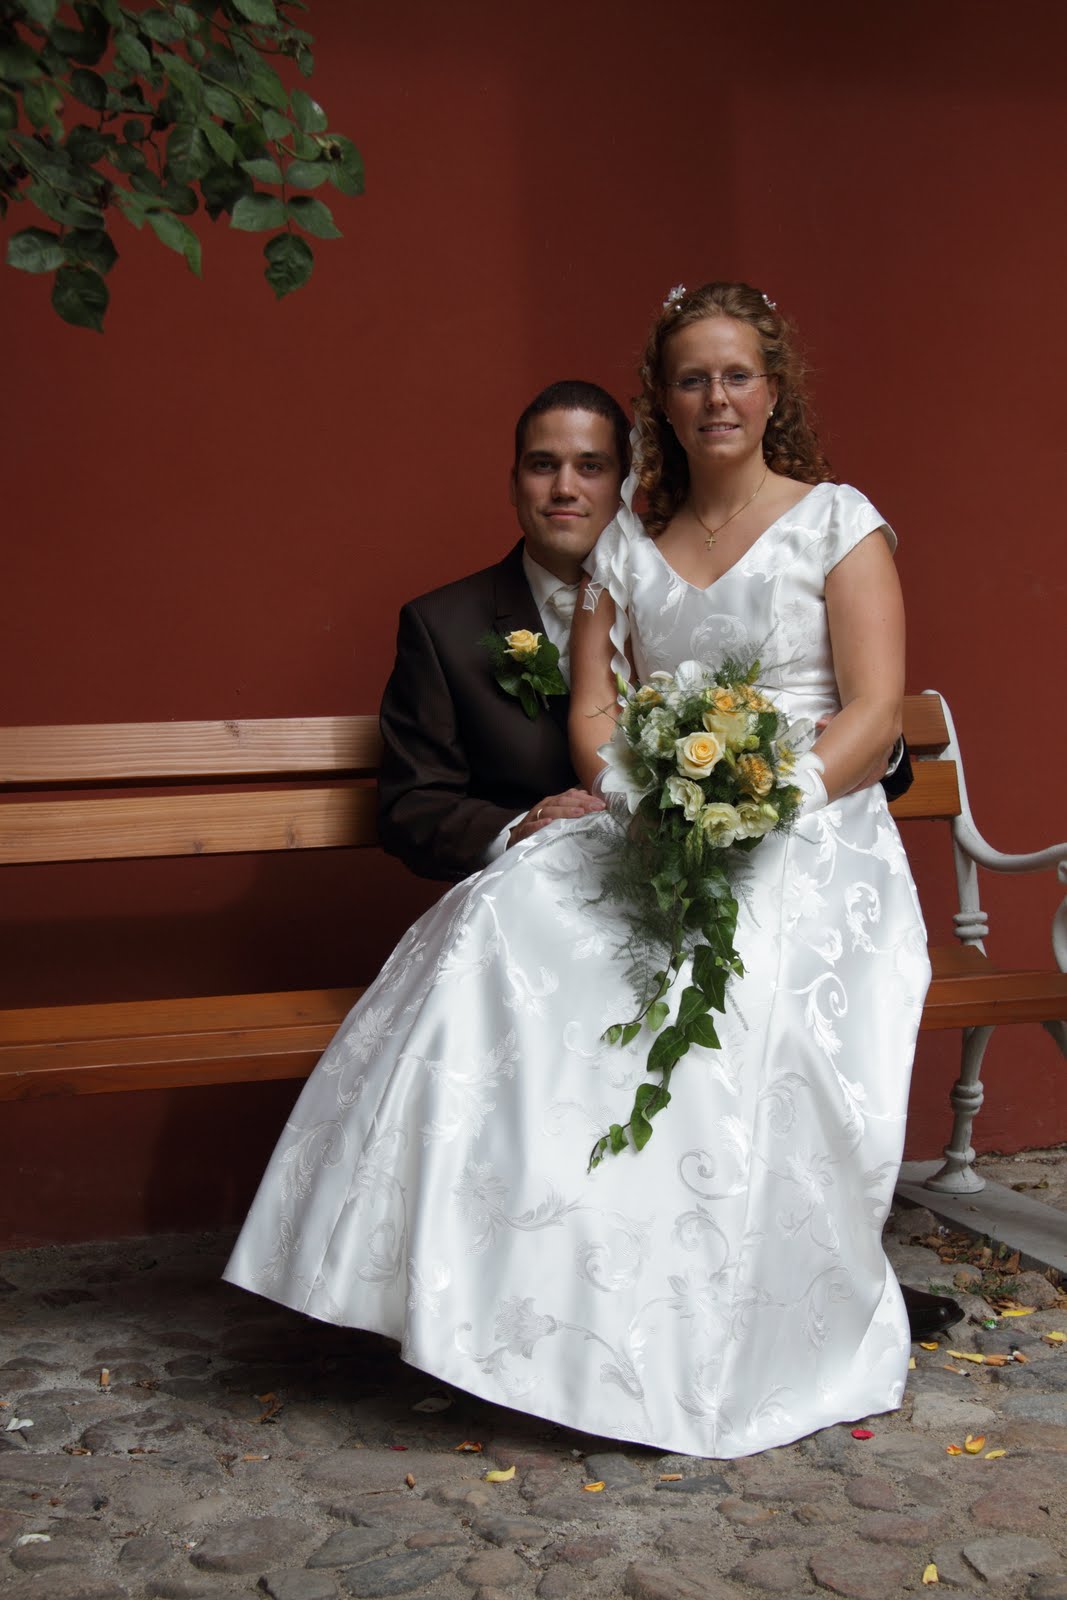 Alpine Wonders My First German Wedding In A Span Of Five Years 